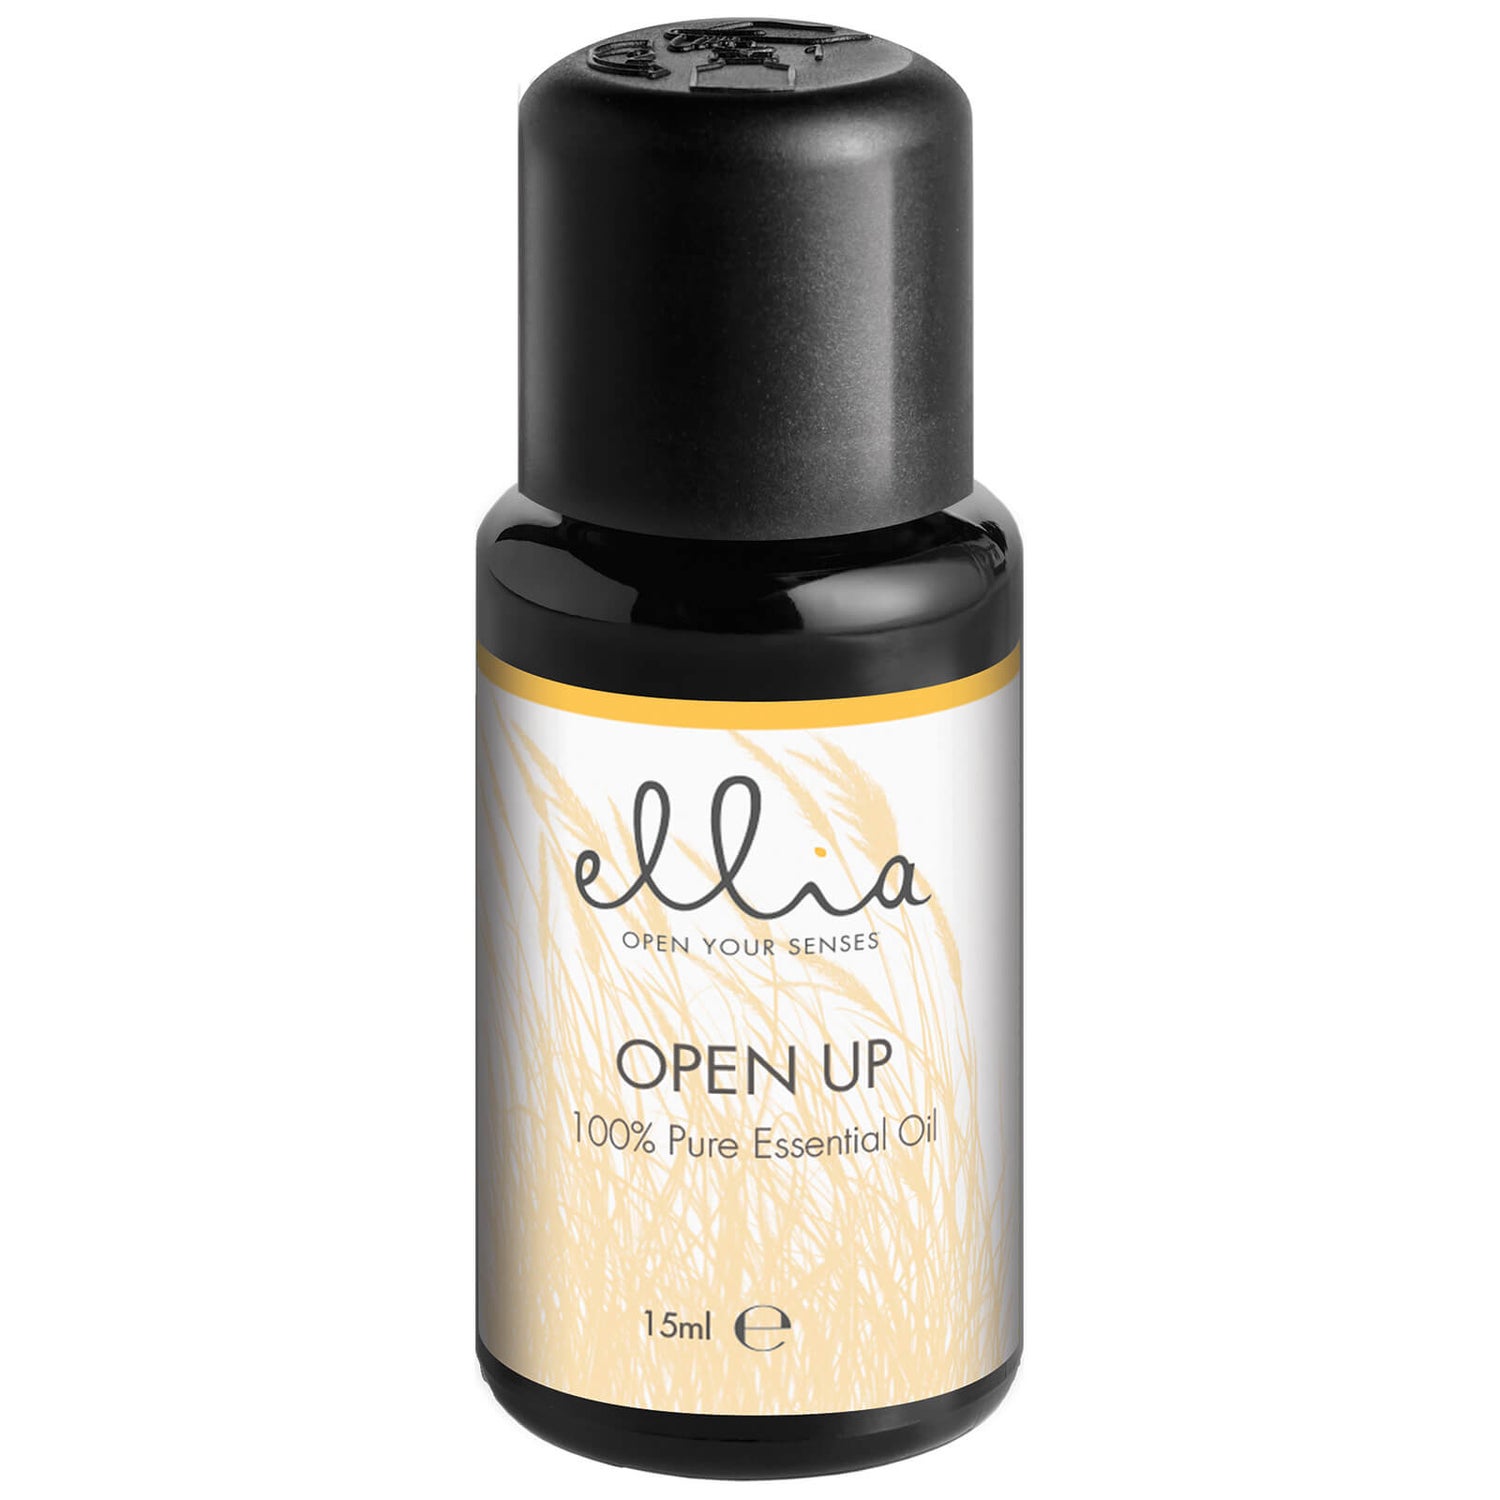 Ellia Aromatherapy mix di oli essenziali per diffusori di aromi - Open Up  15 ml - Spedizione GRATIS